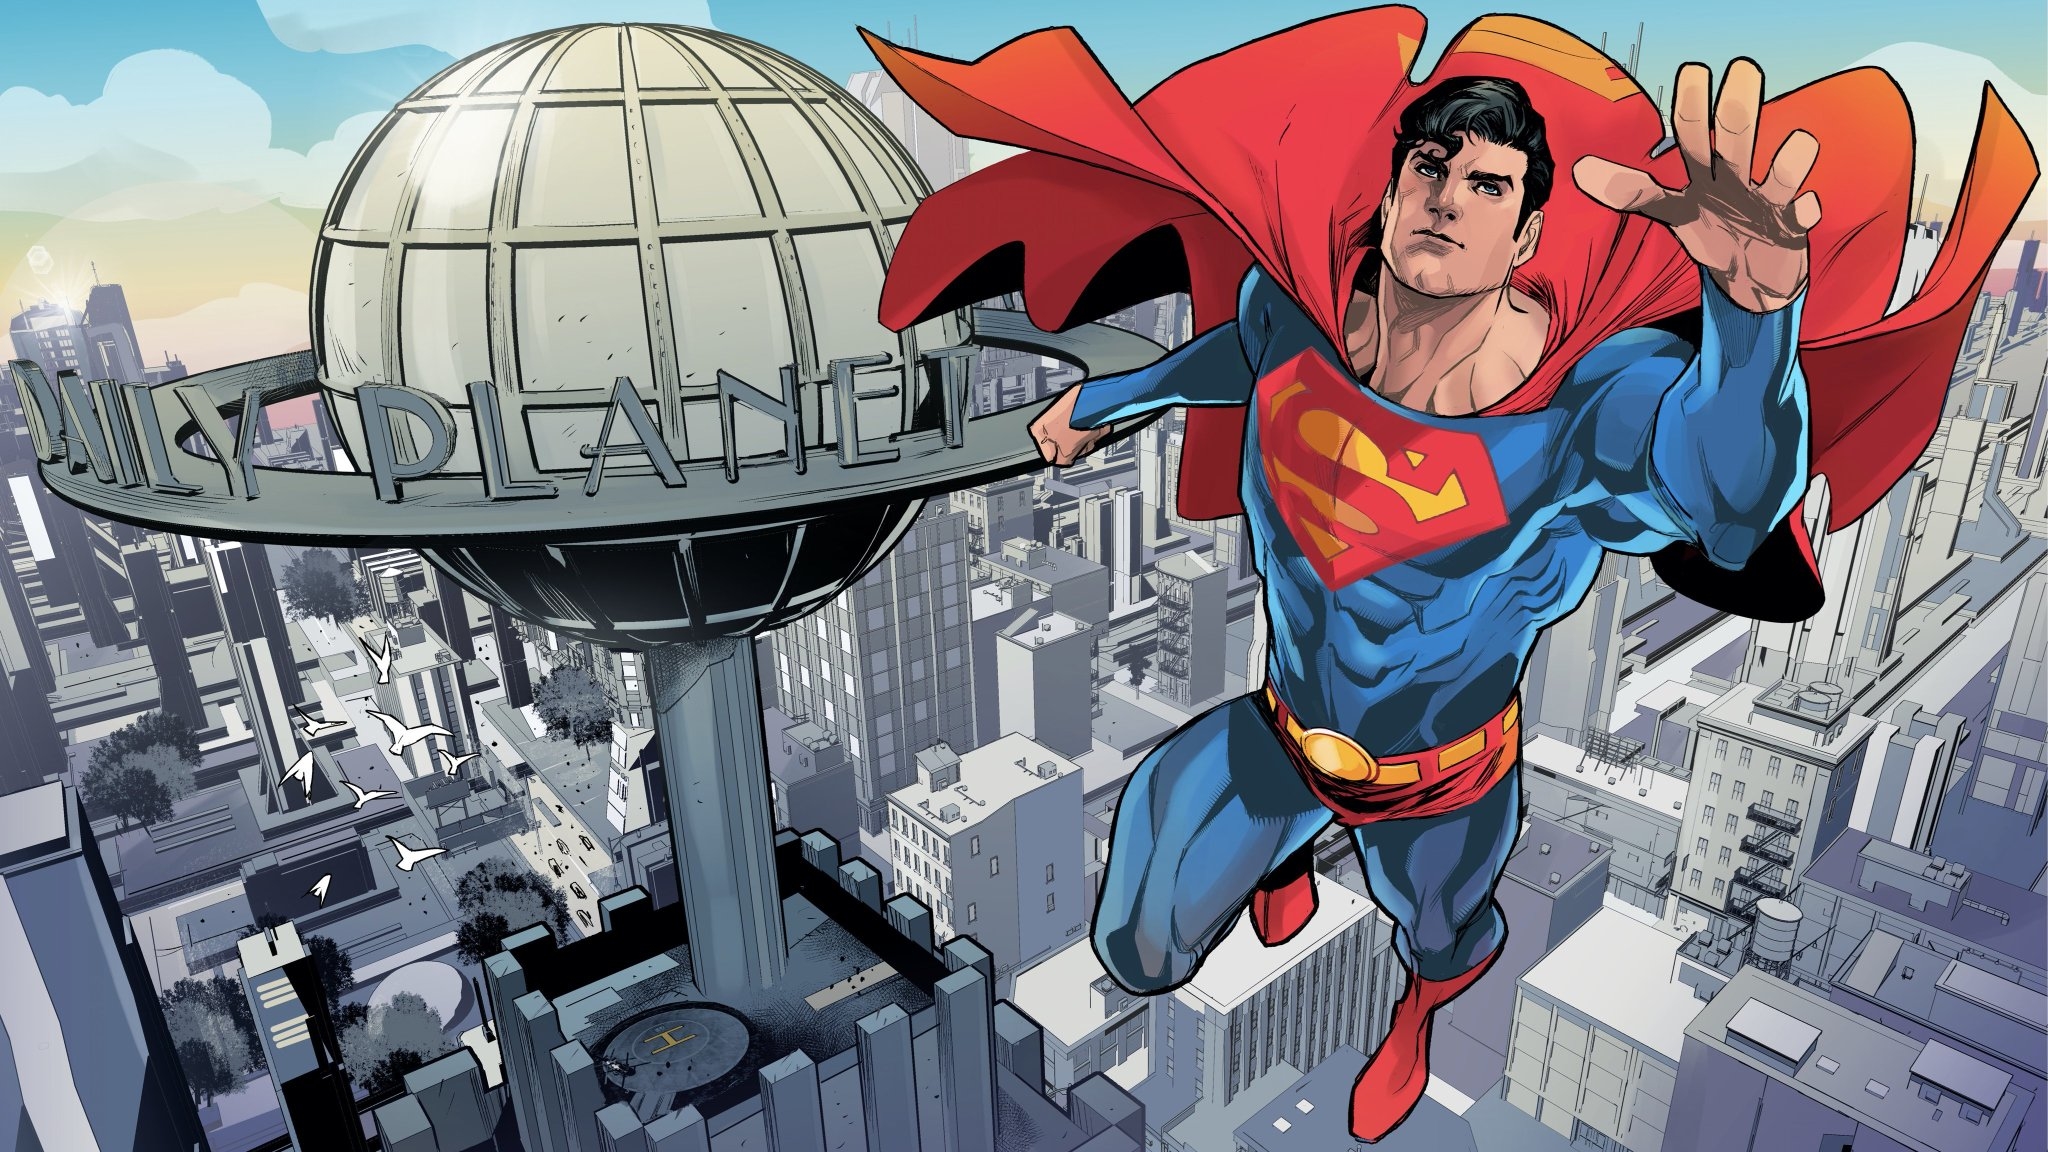 Superman Metropolis DC Comic Wallpaper, HD Superheroes 4K Wallpapers,  Images, Photos and Background - Wallpapers Den